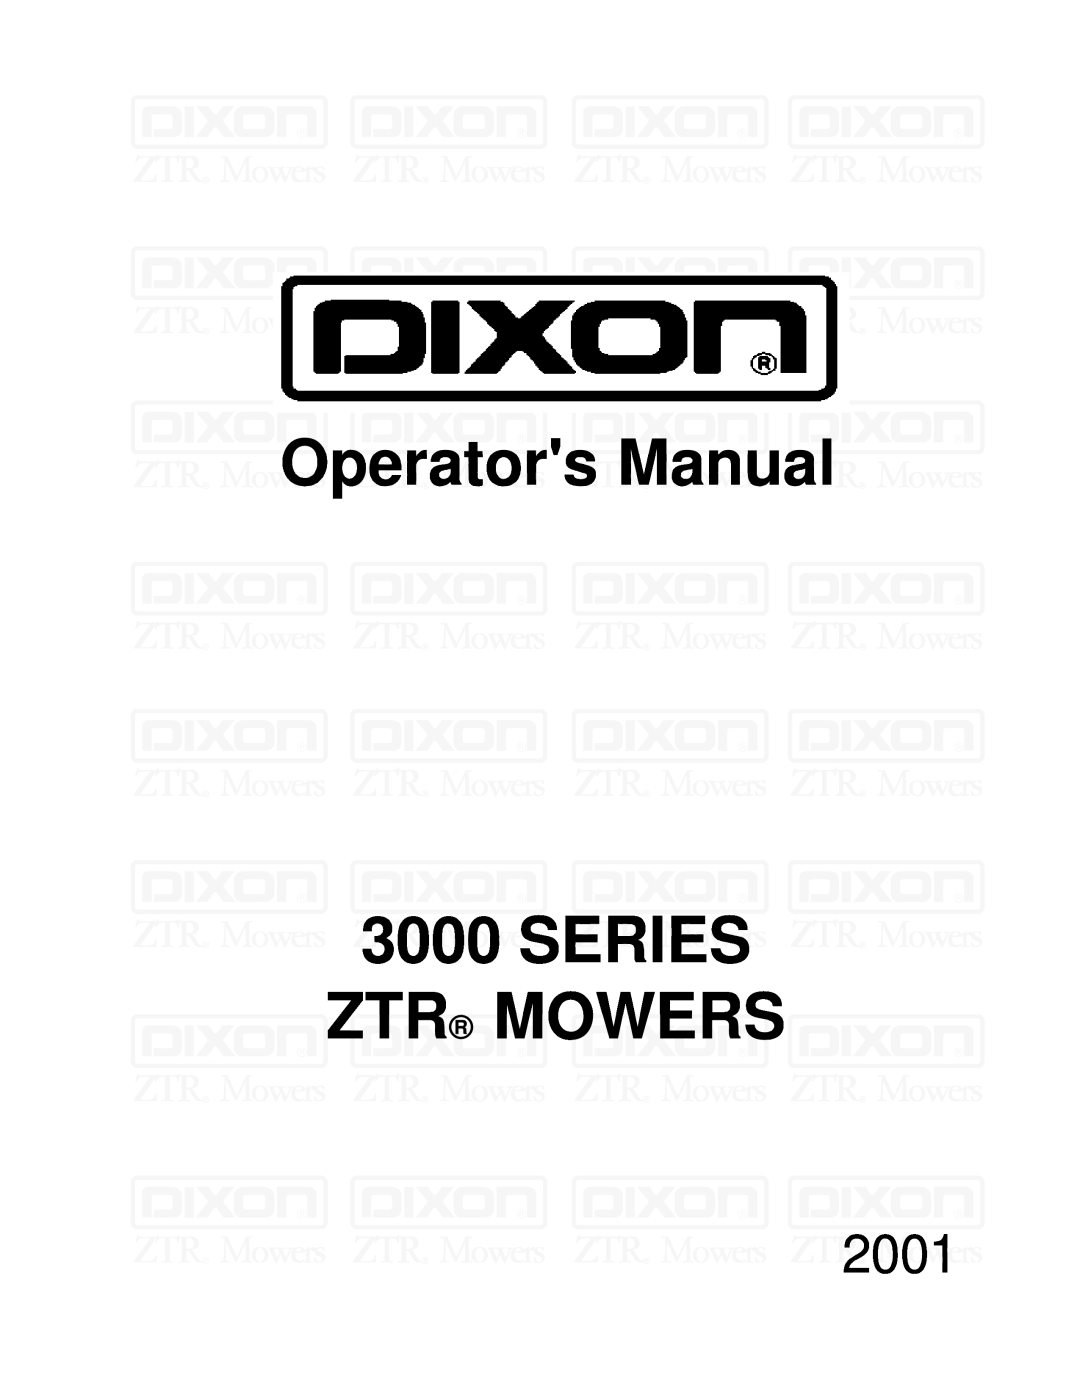 Dixon 6025 manual Operators Manual 3000 SERIES ZTR MOWERS, 2001 